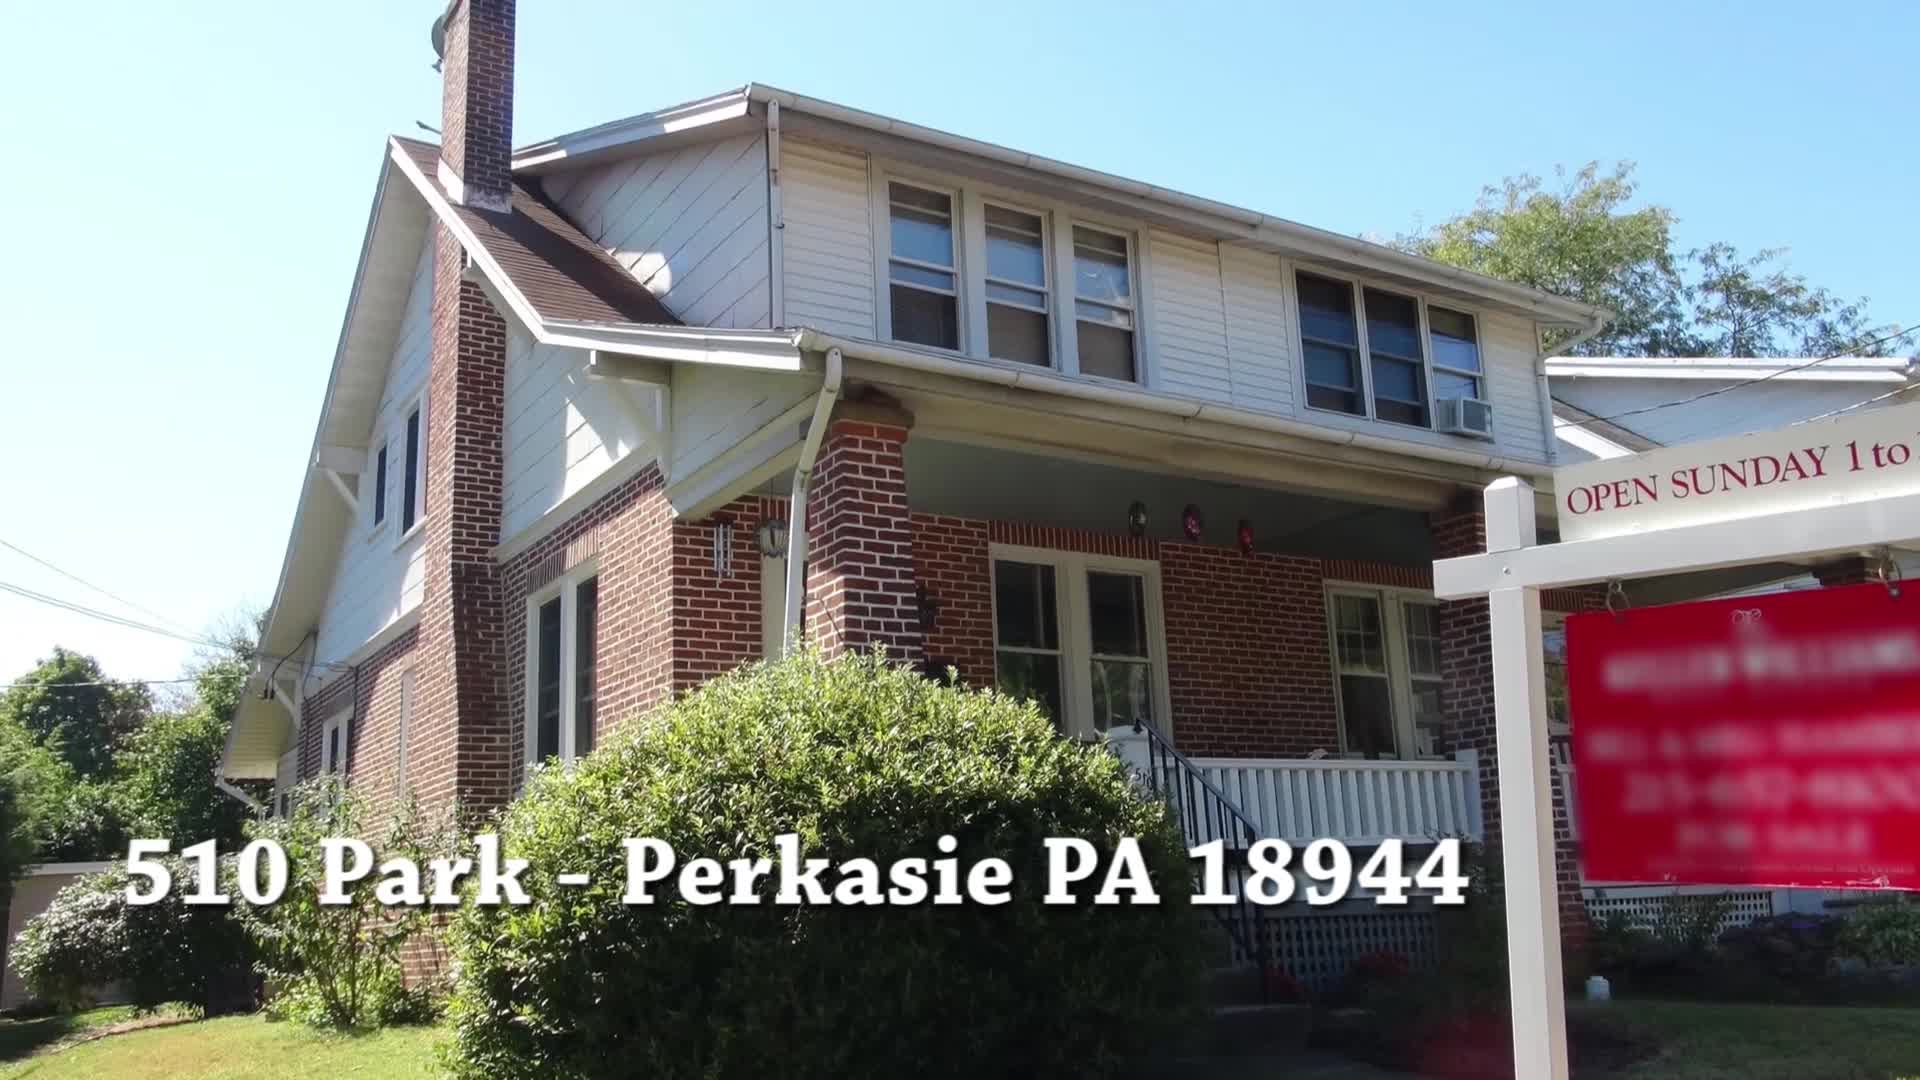 Home for sale in 510 Park Perkasie PA 18944 – Foreclosure Properties Perkasie PA 18944